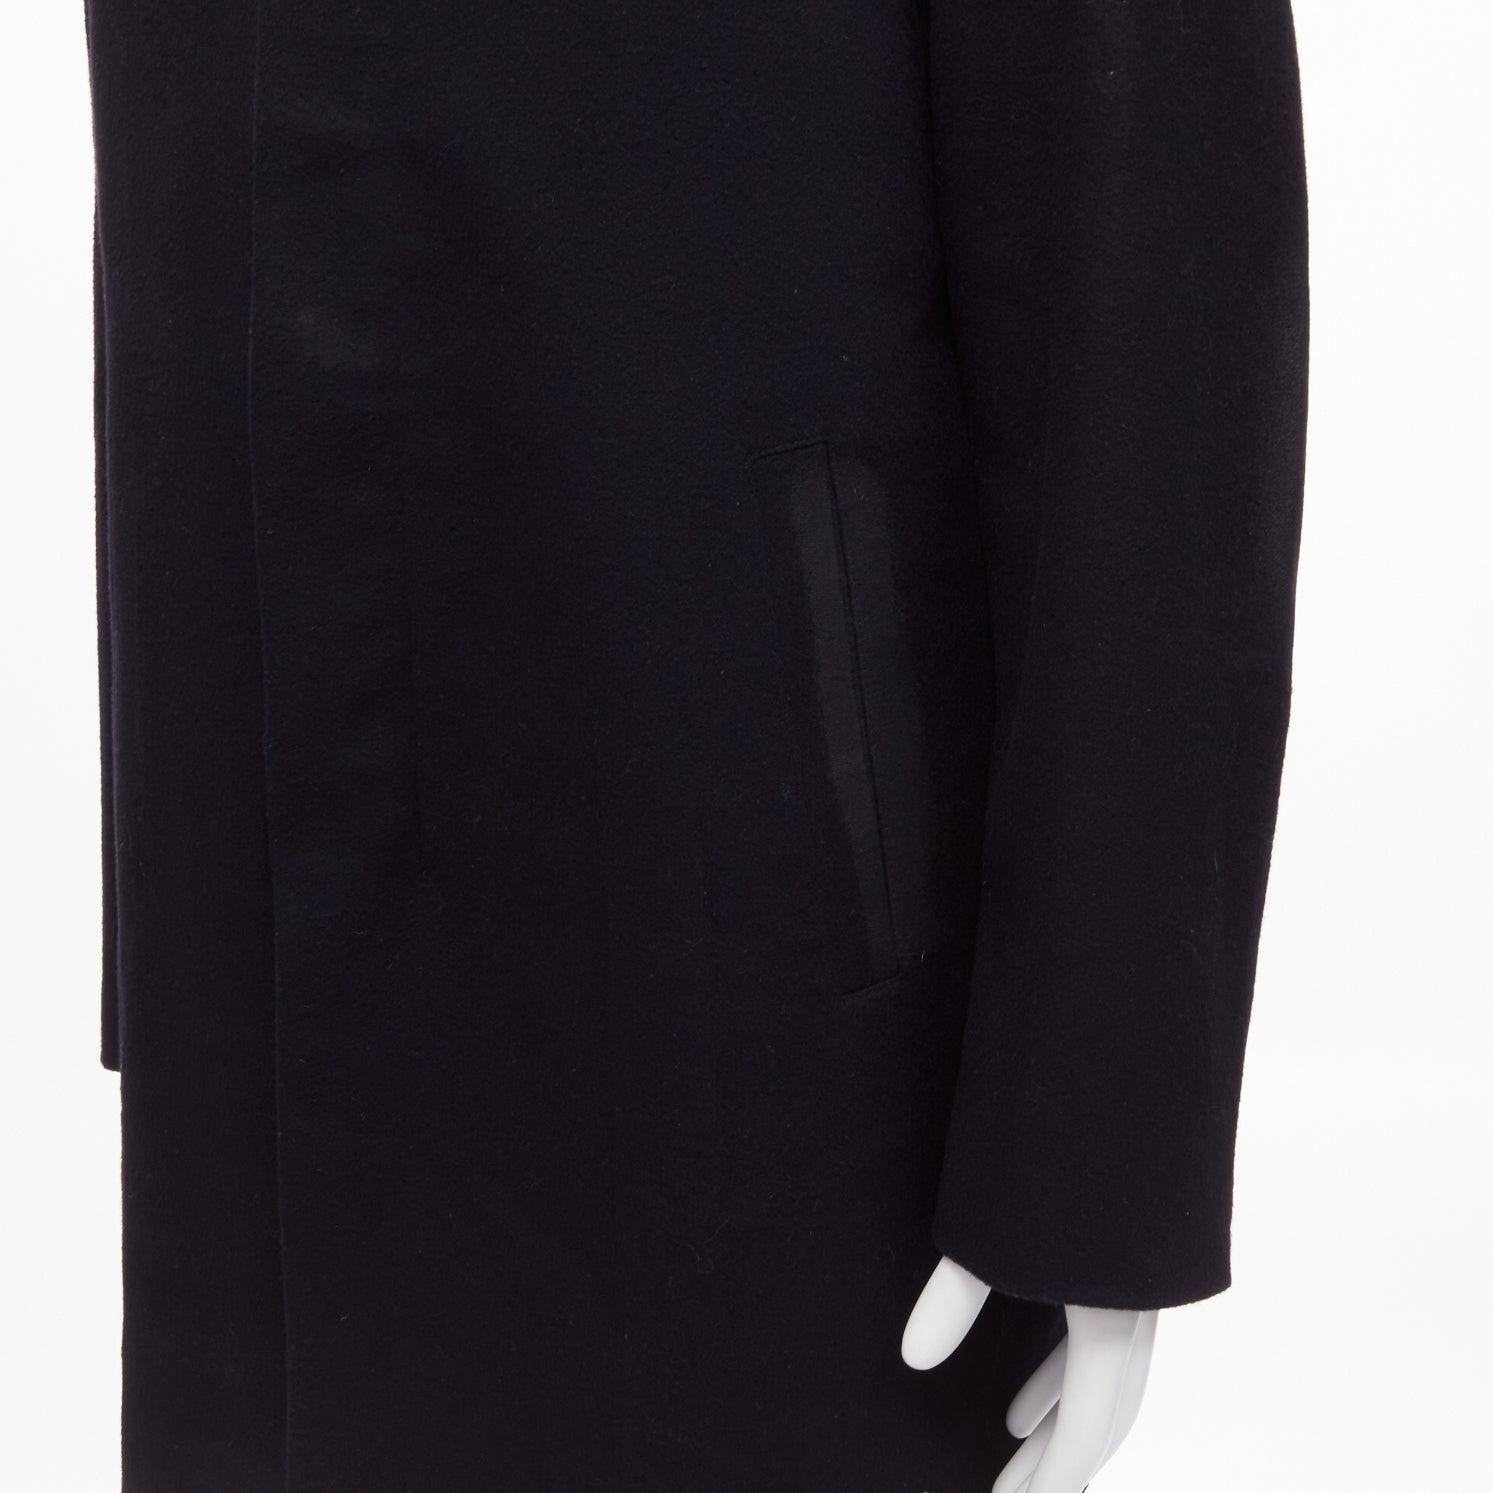 PRADA 2009 100% virgin wool black minimalist coated sleeve coat IT48 M For Sale 4